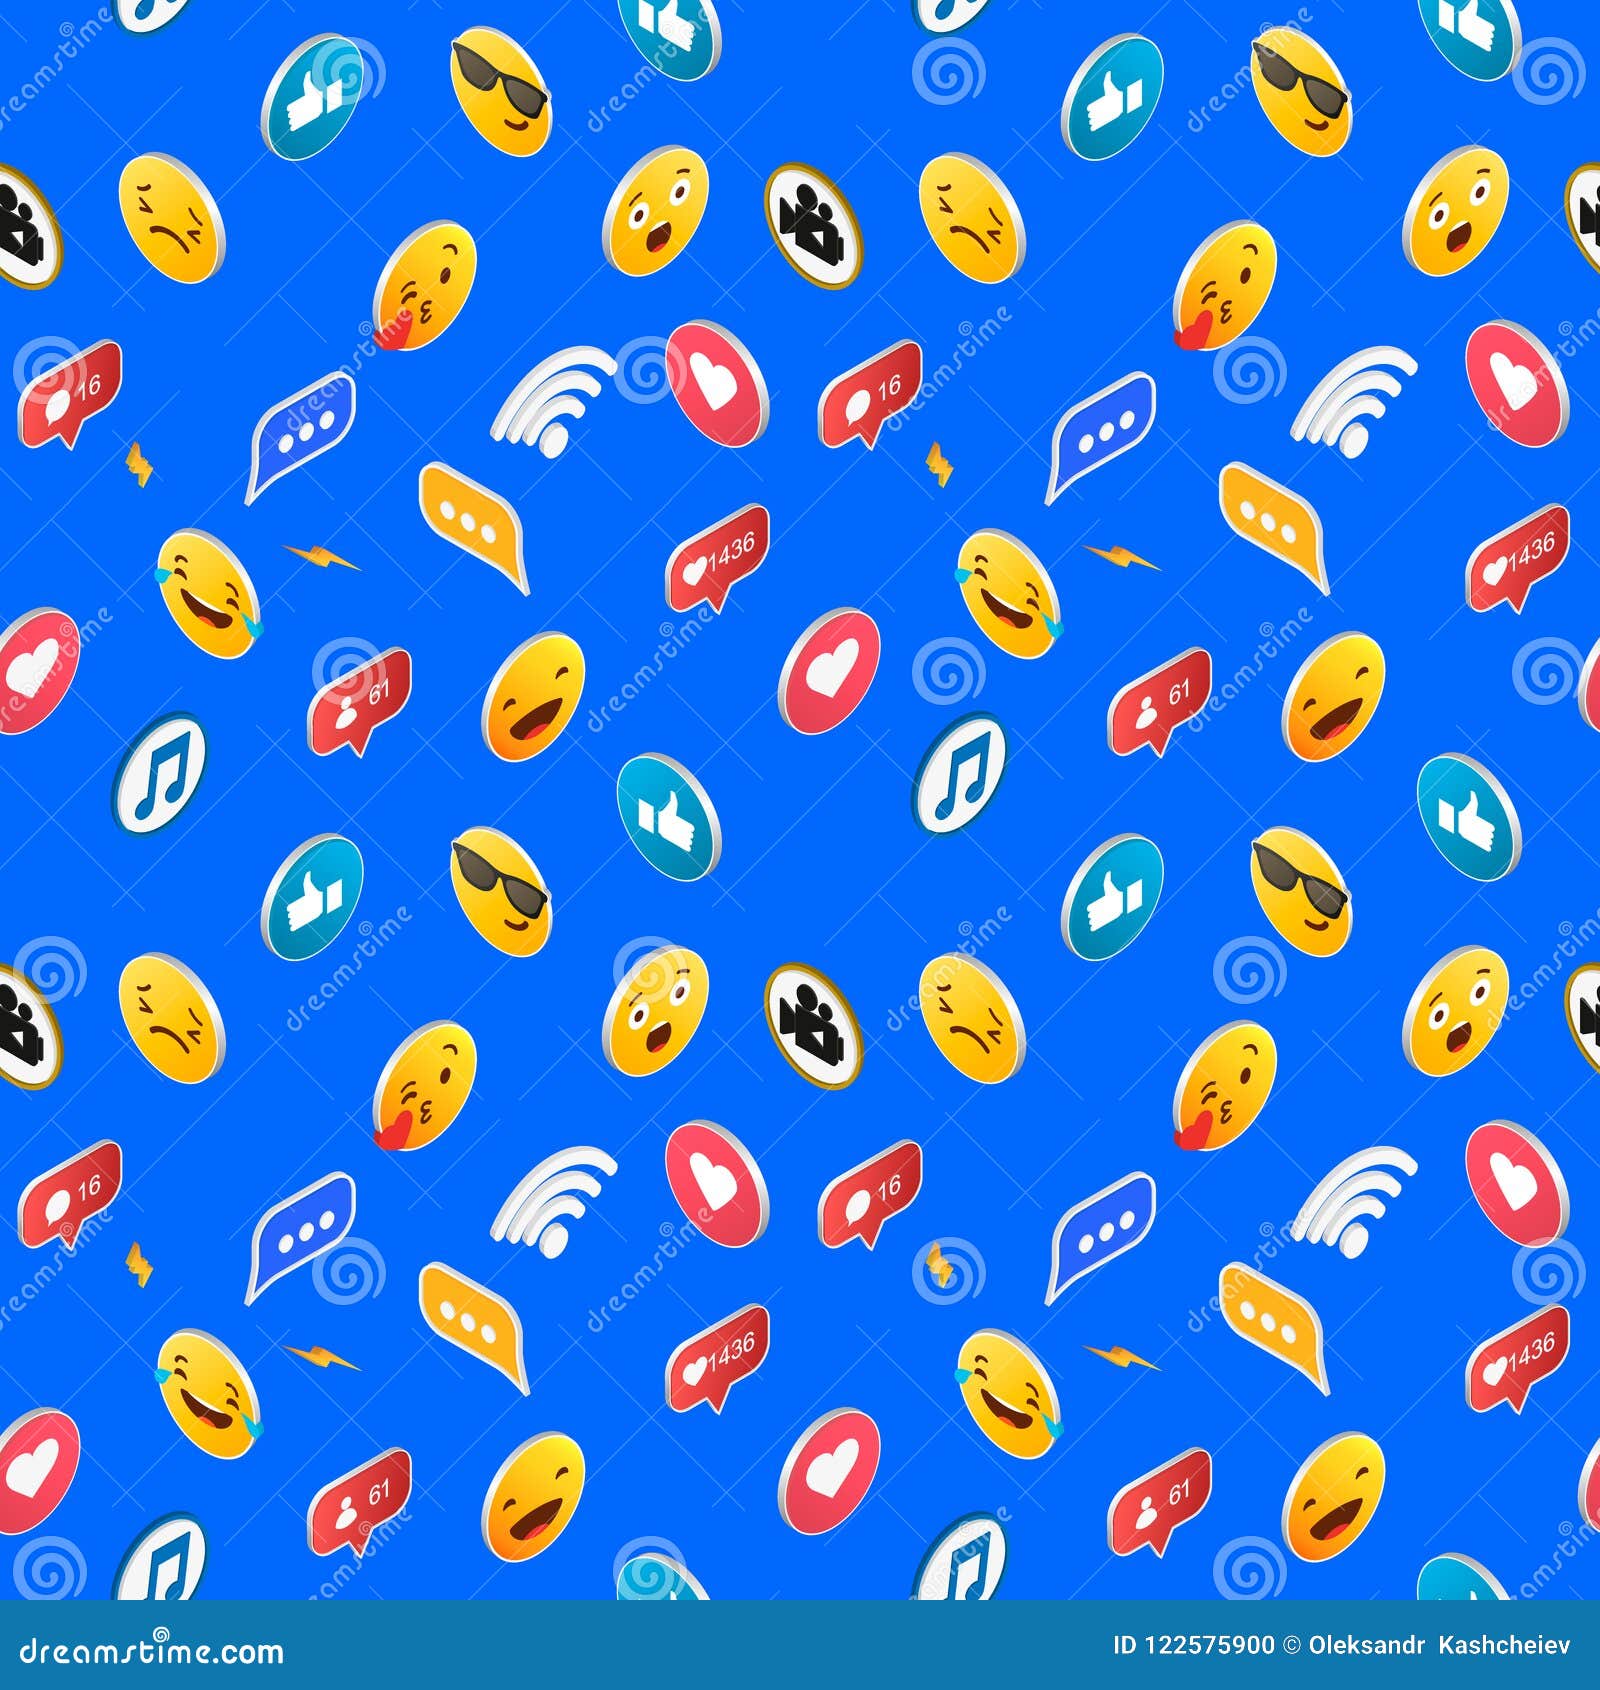 Emoji Seamless Pattern On A White Background. Illustration Stock ...